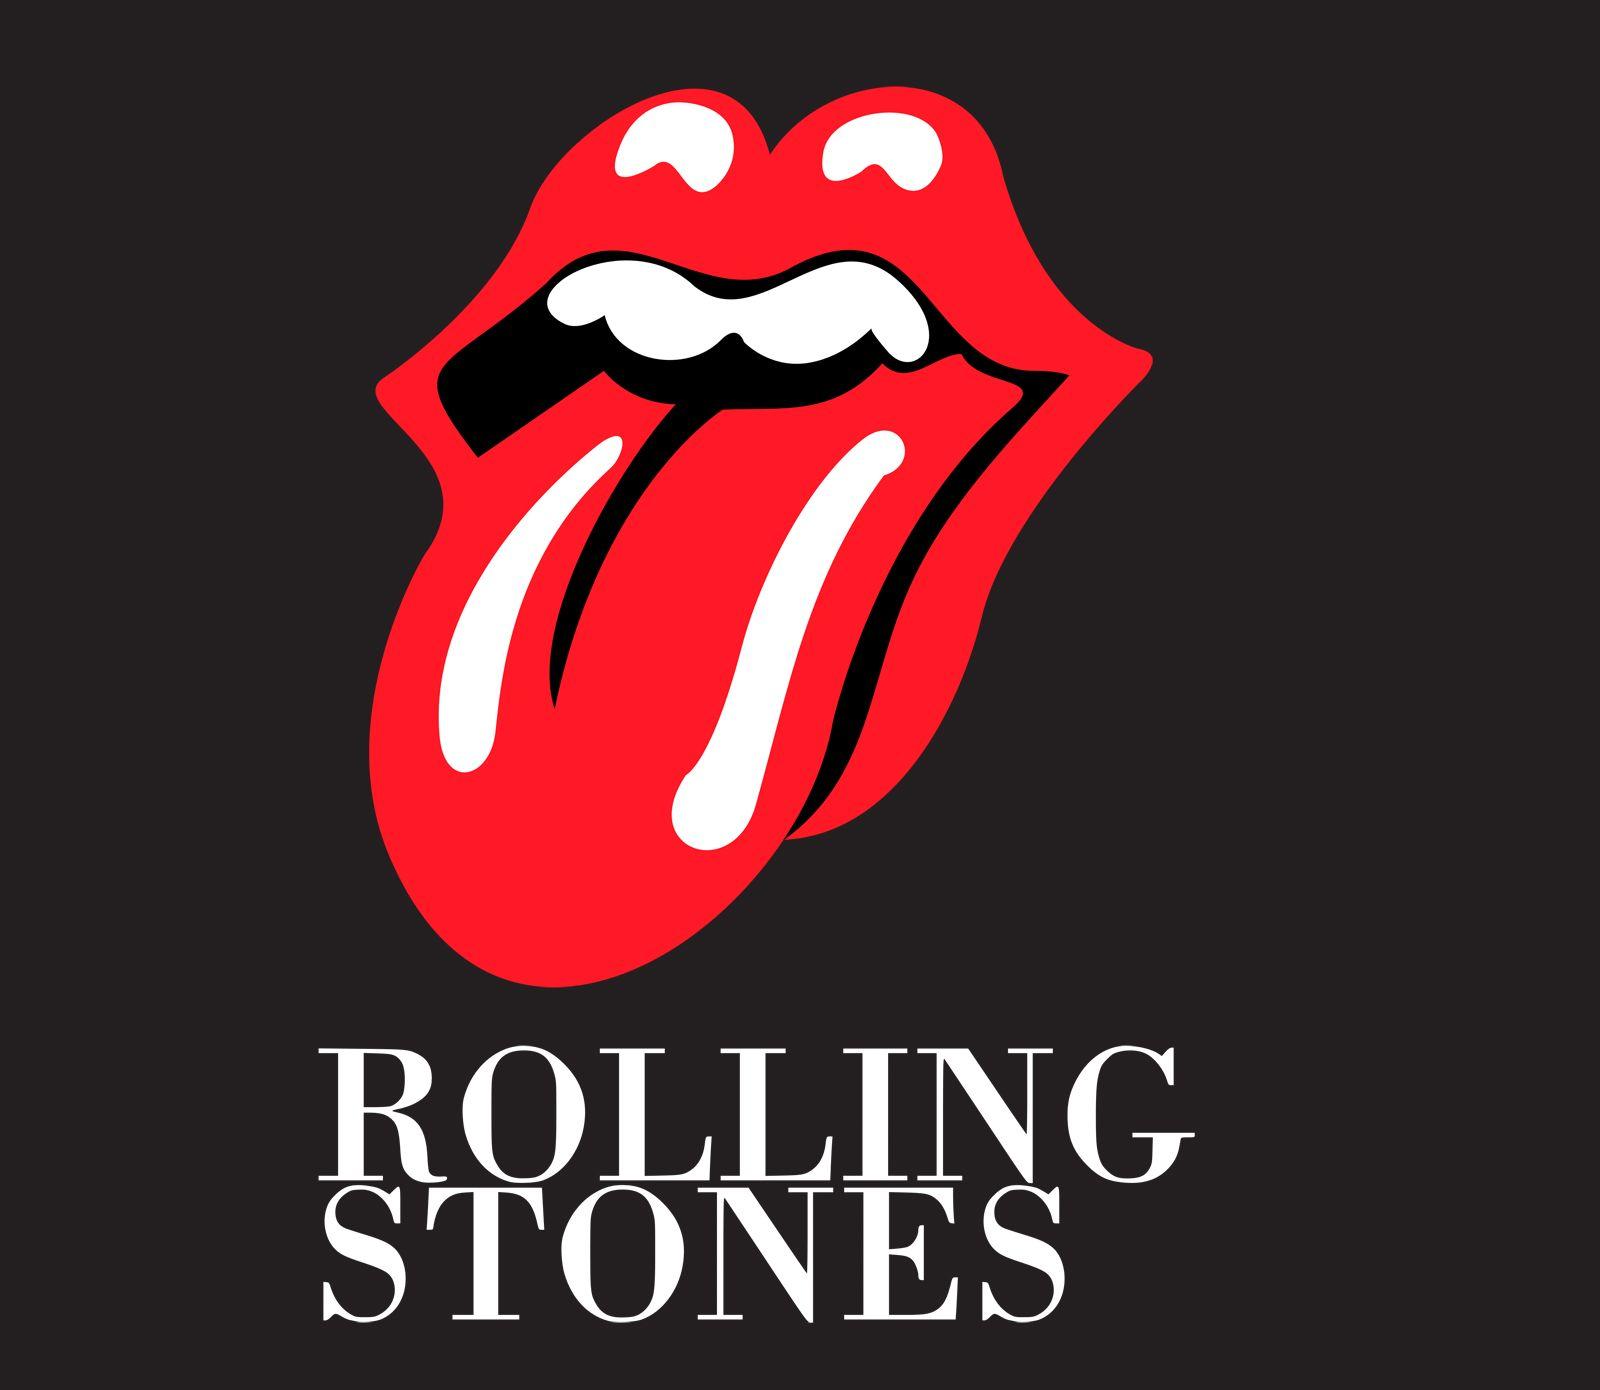 Rolling Stones Logo - rolling stones tongue logo | All logos world | Rolling Stones ...